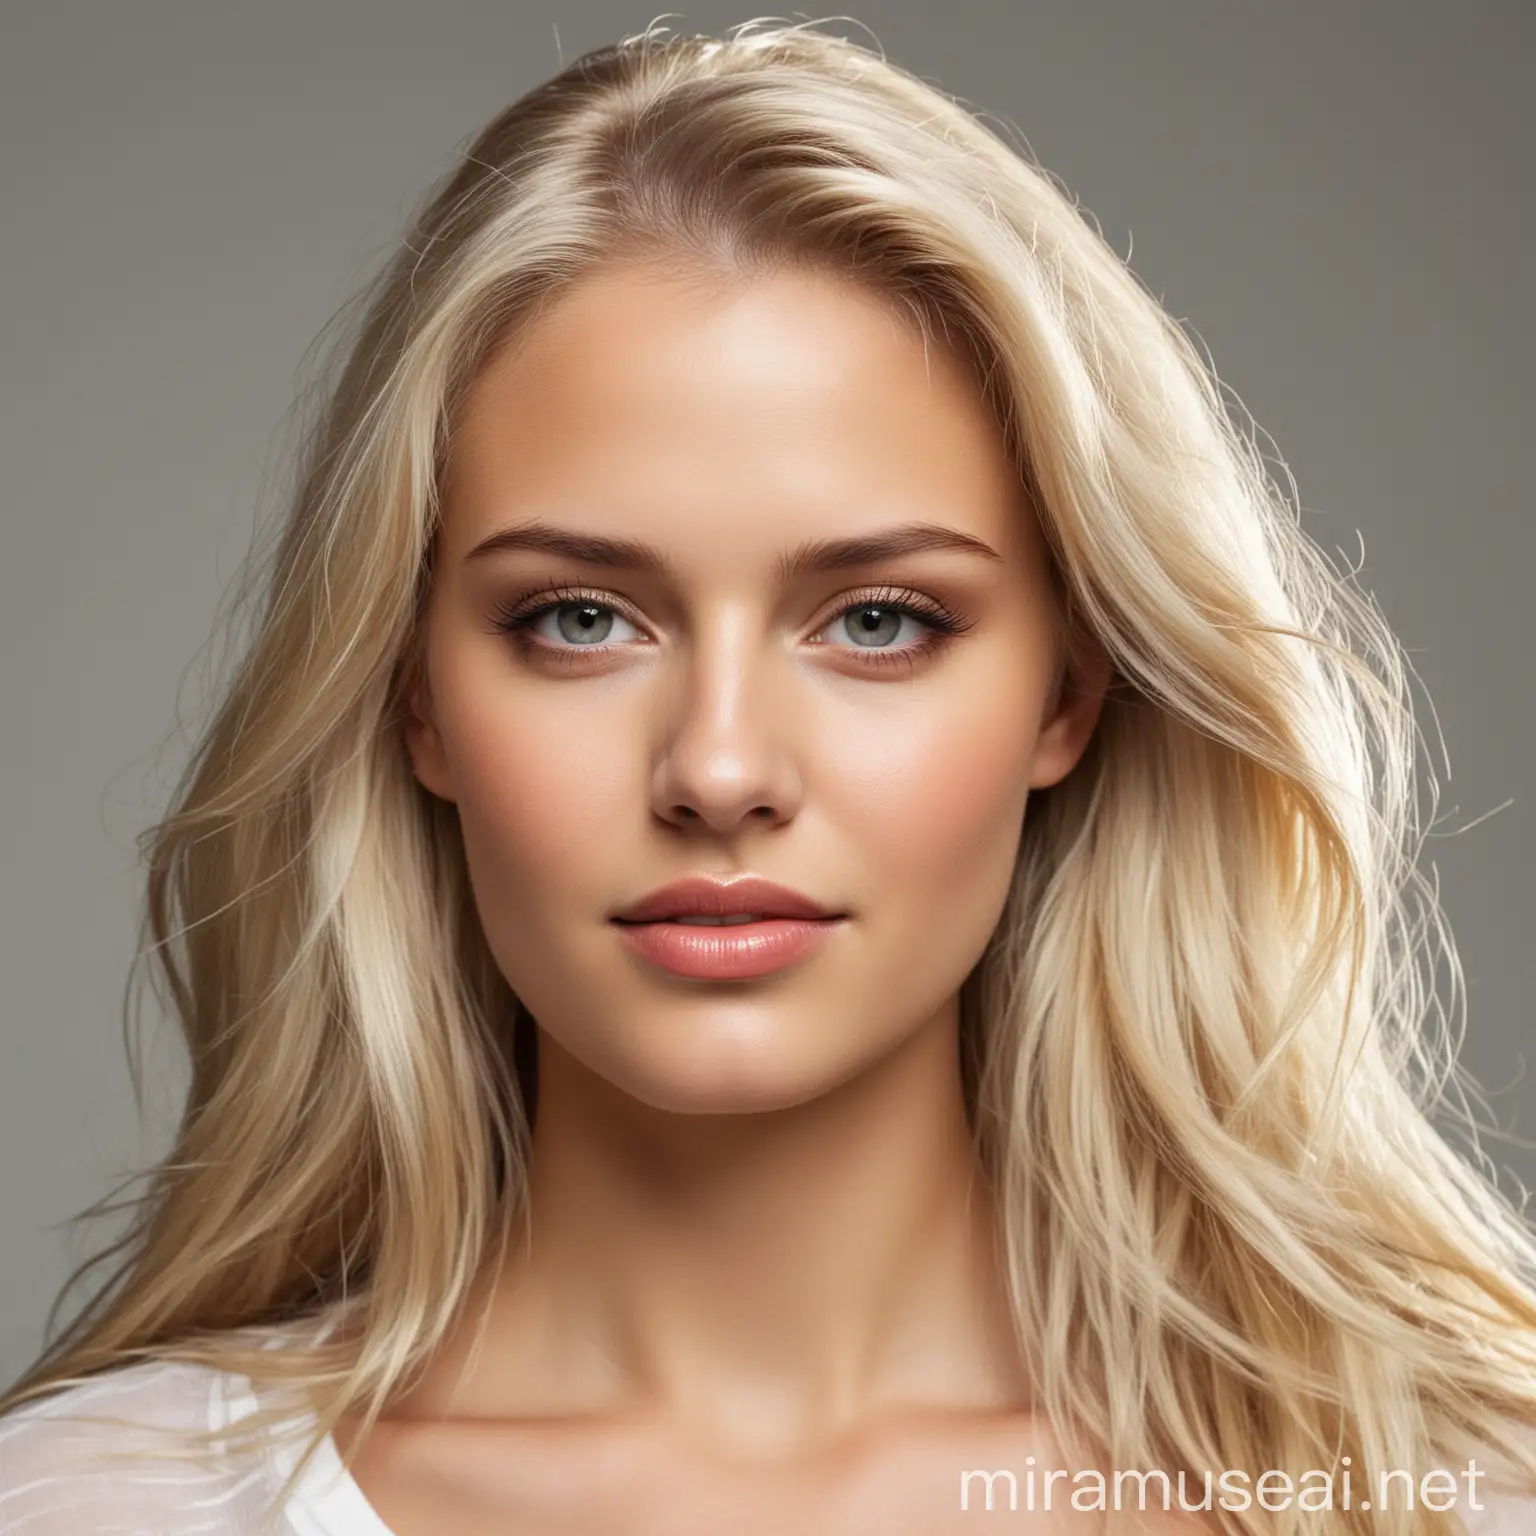 Blonde Caucasian Female Model with Shiny Hair in Elegant Pose